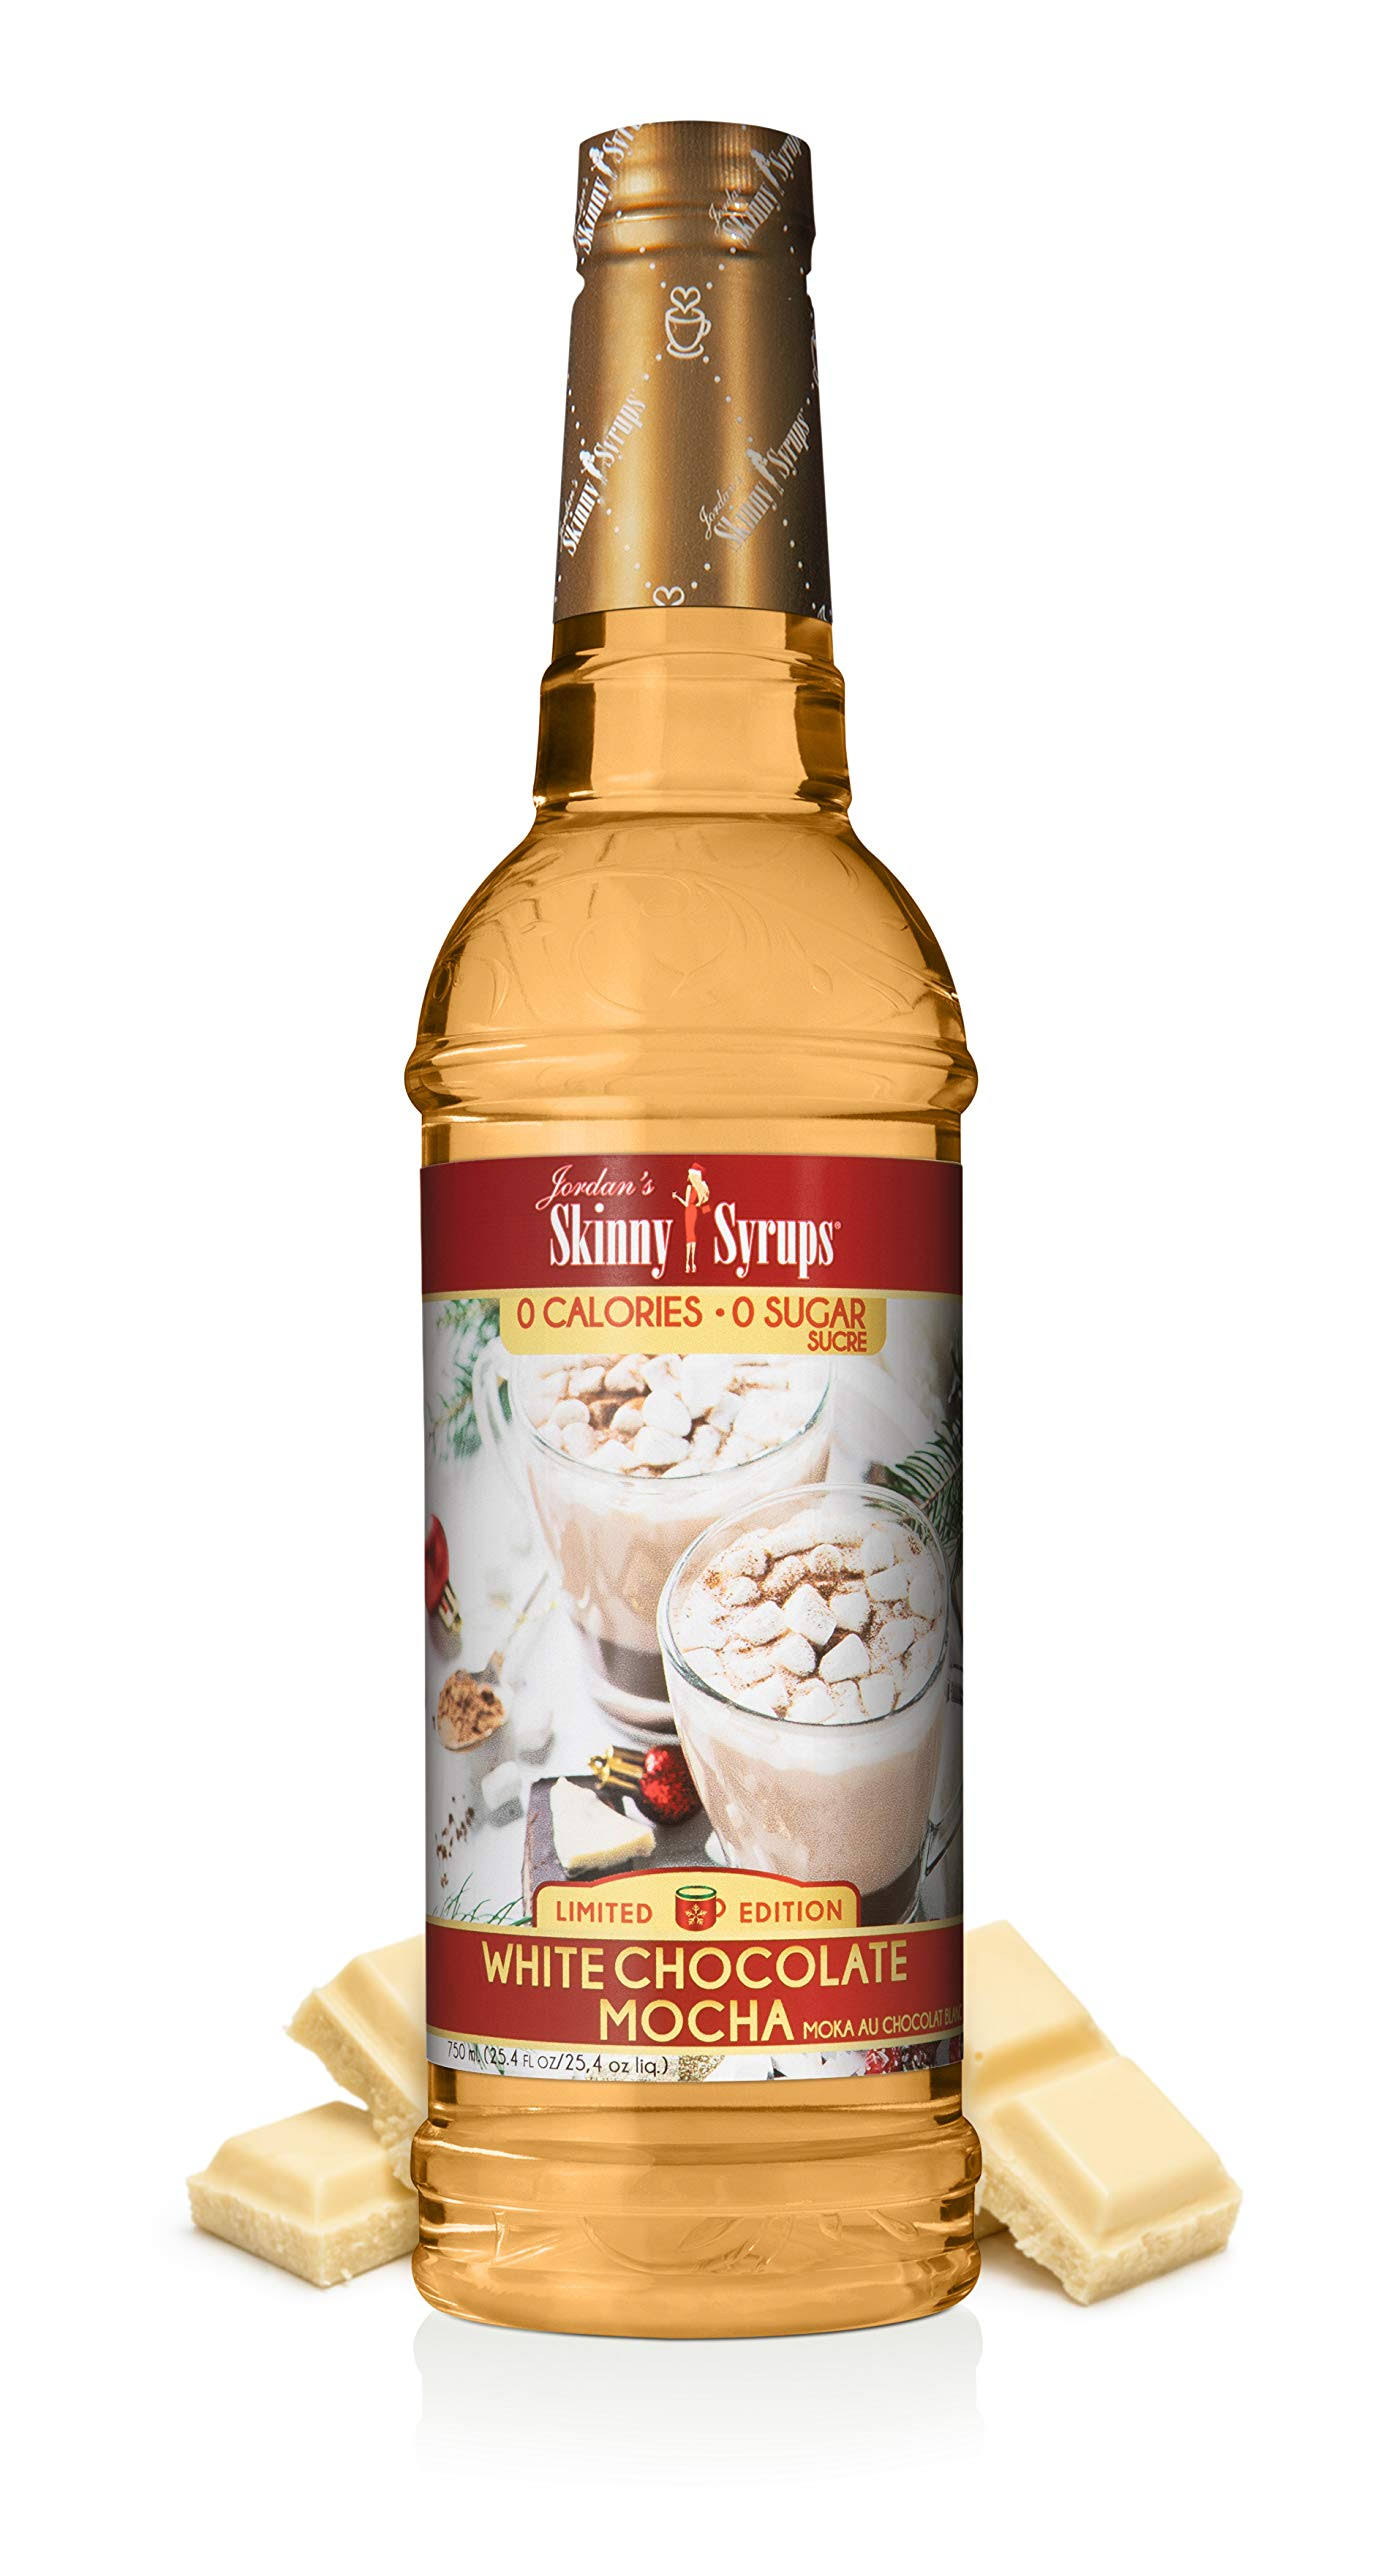 Jordan's Skinny Syrups - Sugar Free, White Chocolate Mocha, 25.4oz